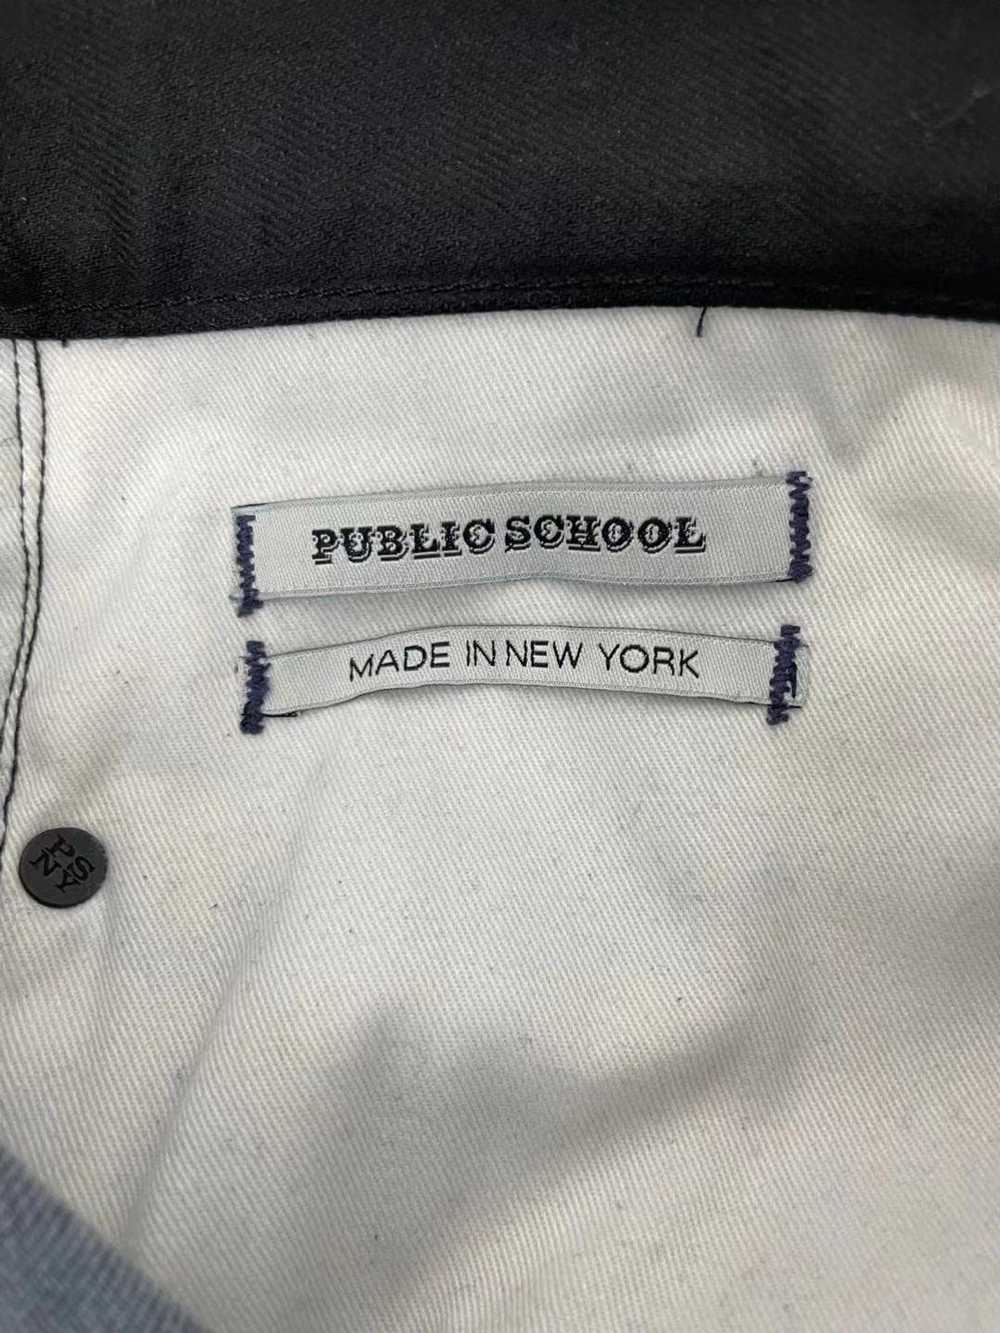 Public School Public School Denim Leather Joggers - image 4